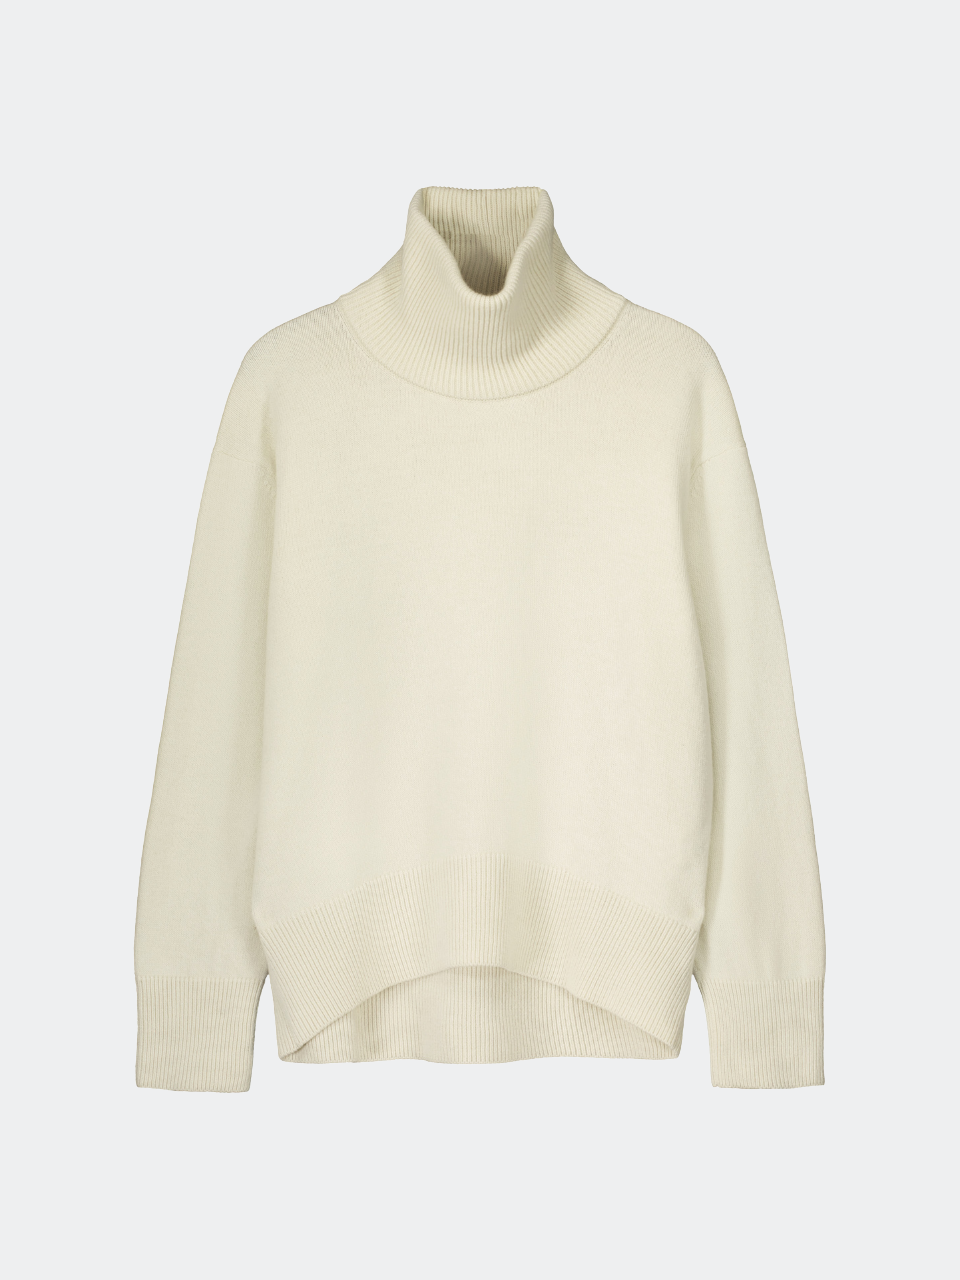 Almada Label - Alma Turtleneck Sweater